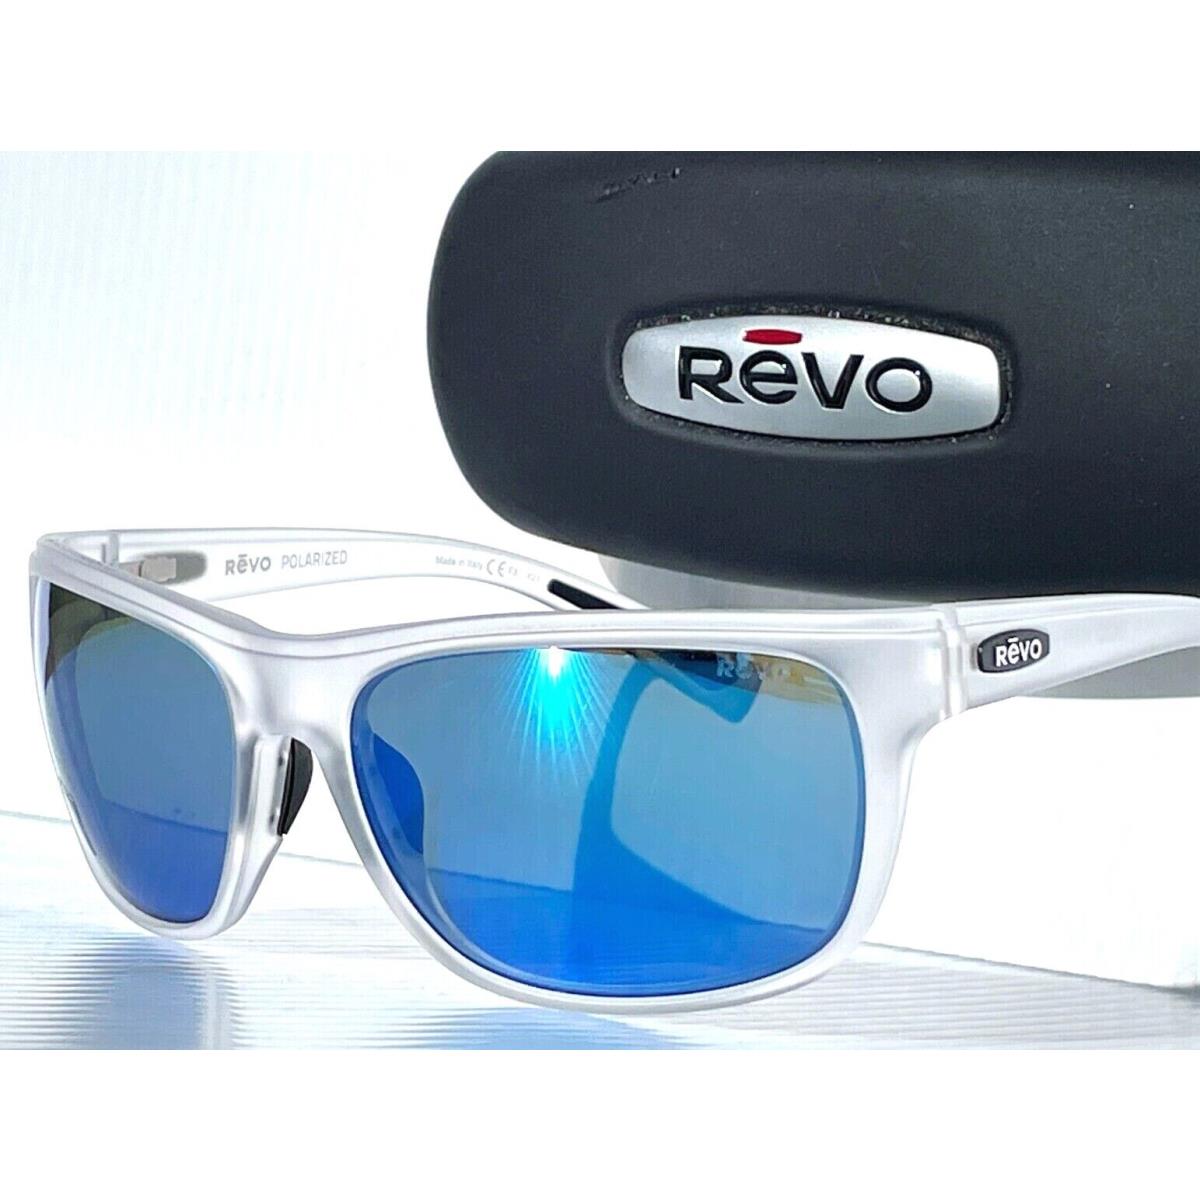 Revo sunglasses Enzo - Matte Crystal Clear Frame, Blue Lens